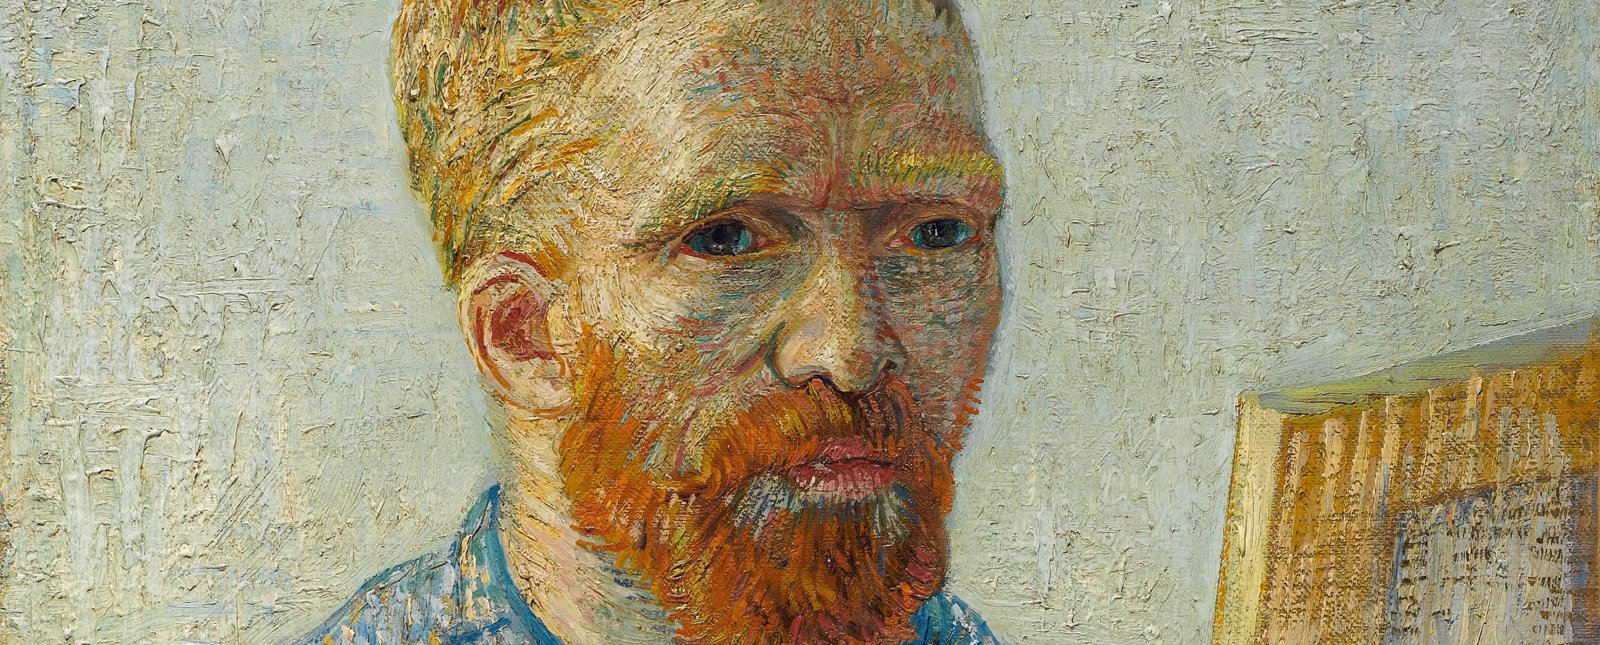 The Secrets Behind Tree Roots Van Gogh S Last Painting